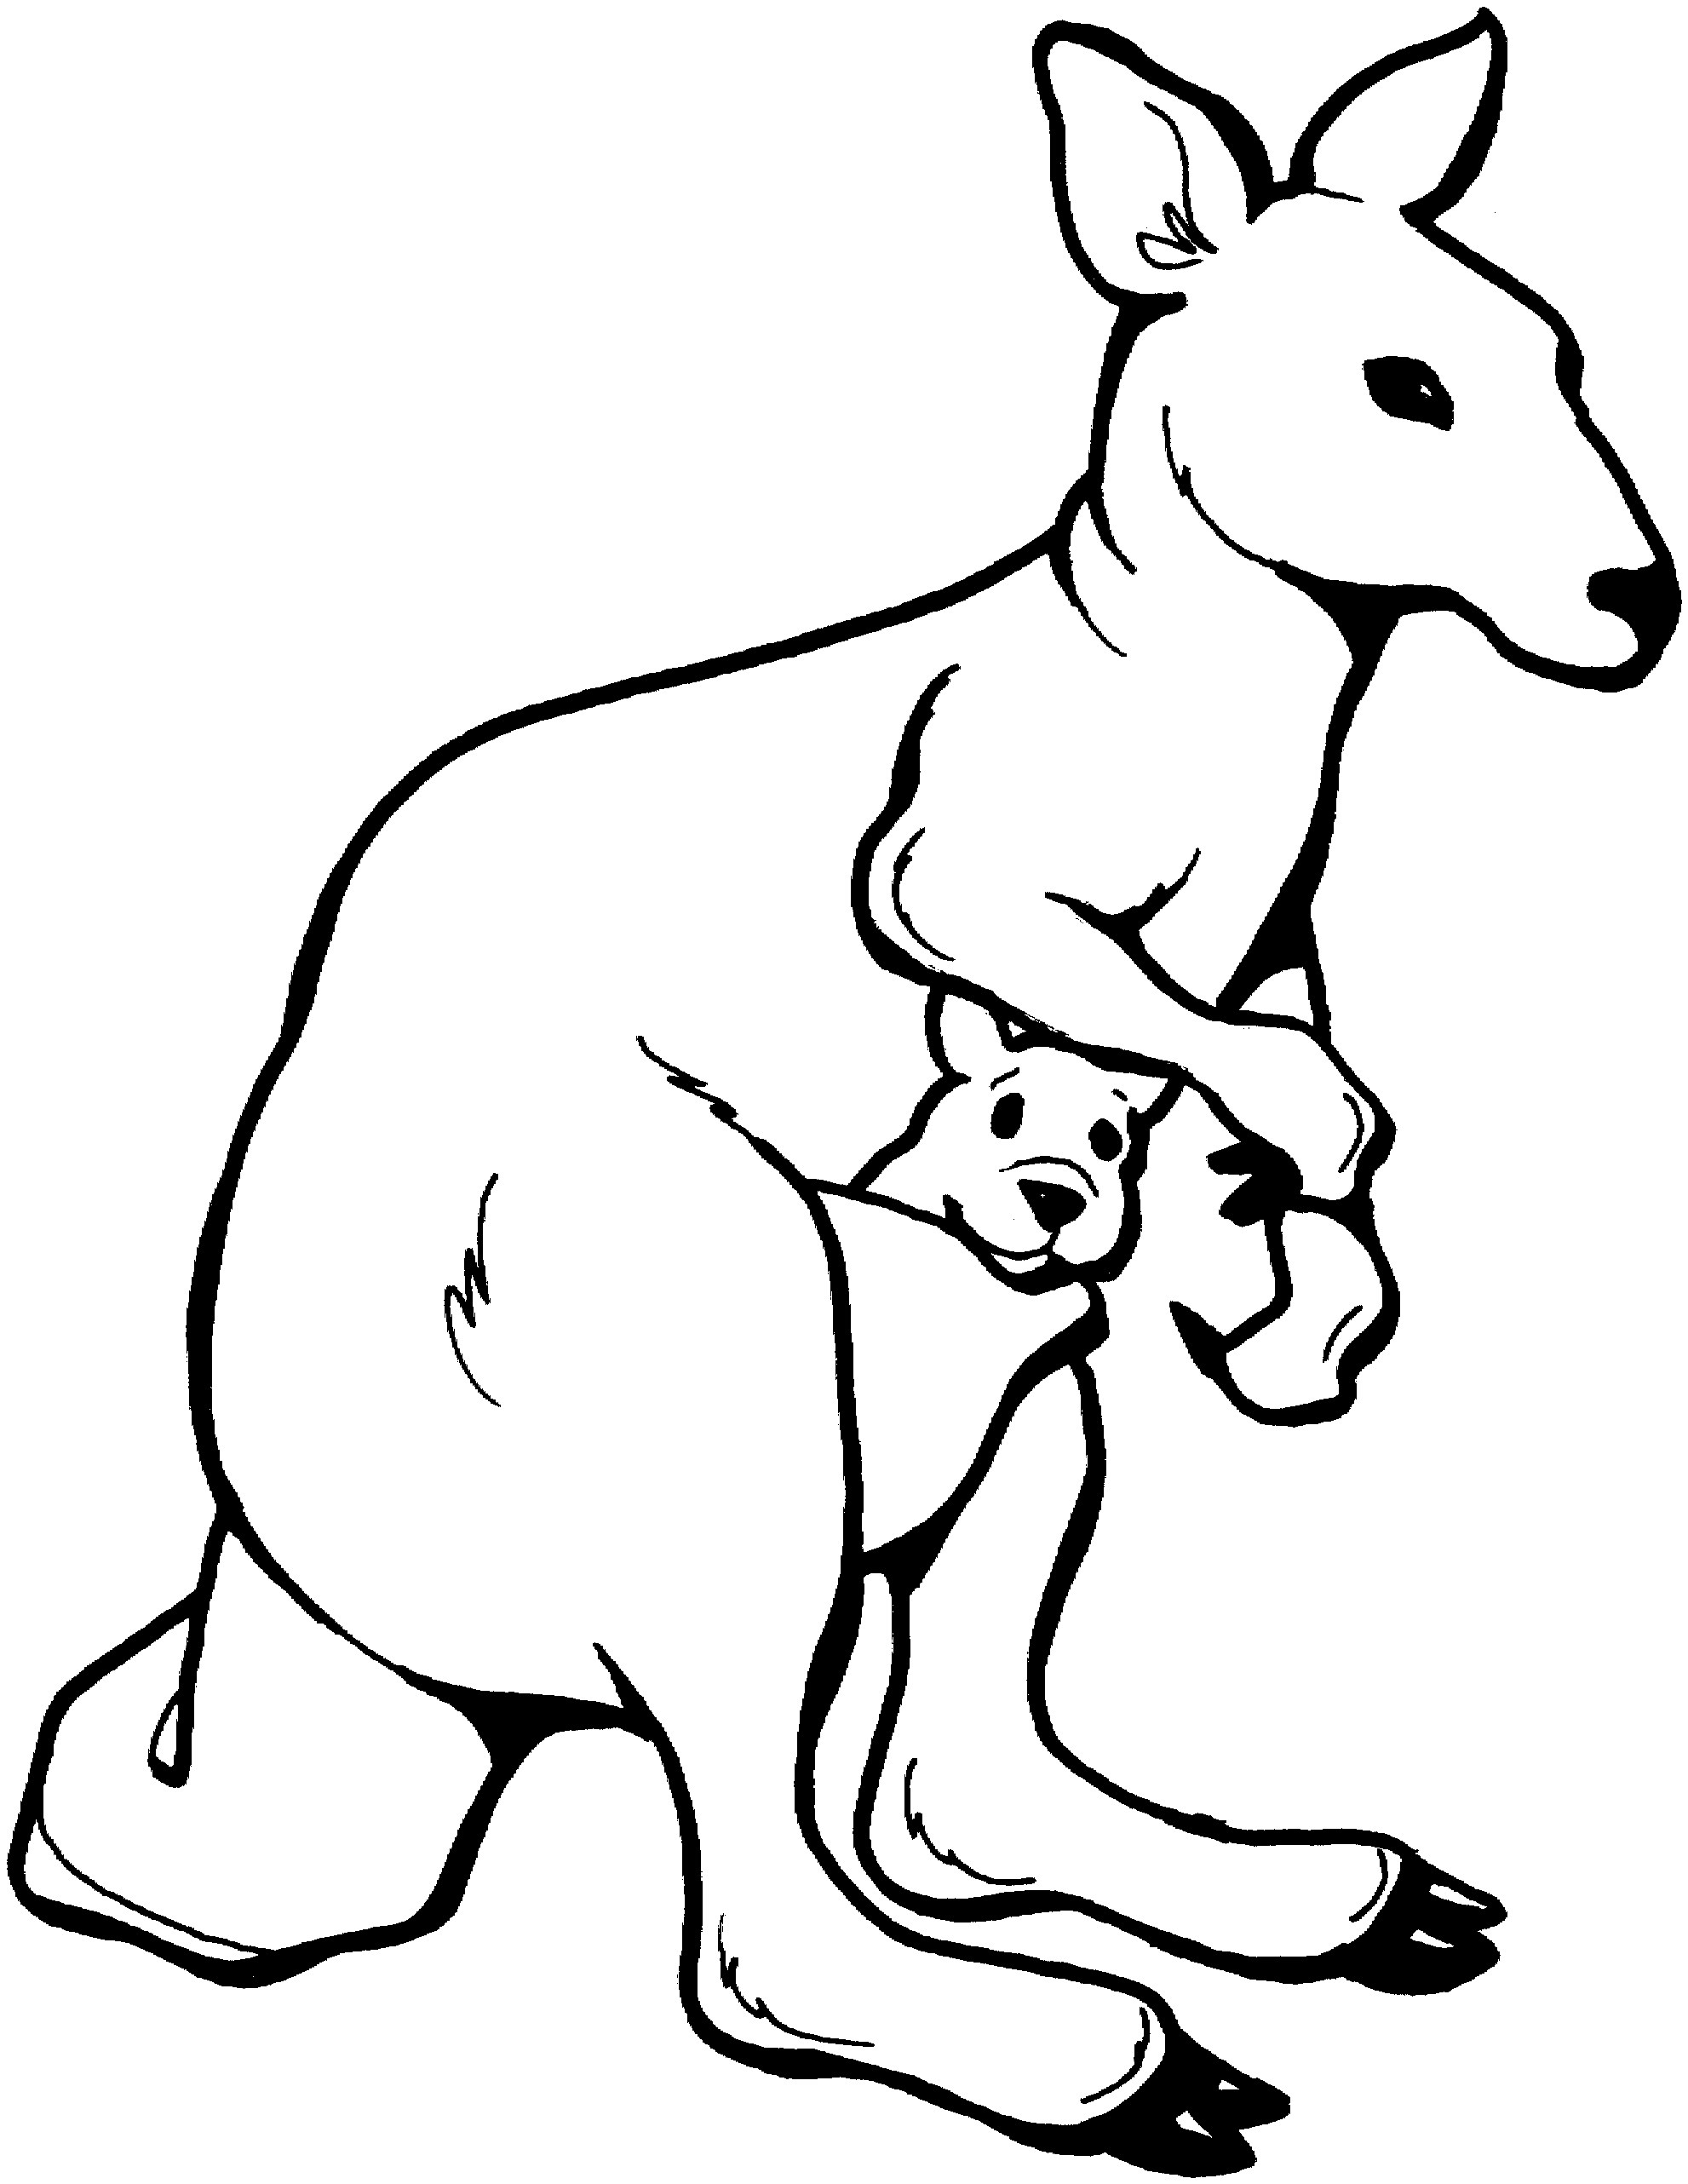 printable pictures of kangaroos kangaroo pattern use the printable outline for crafts of kangaroos printable pictures 